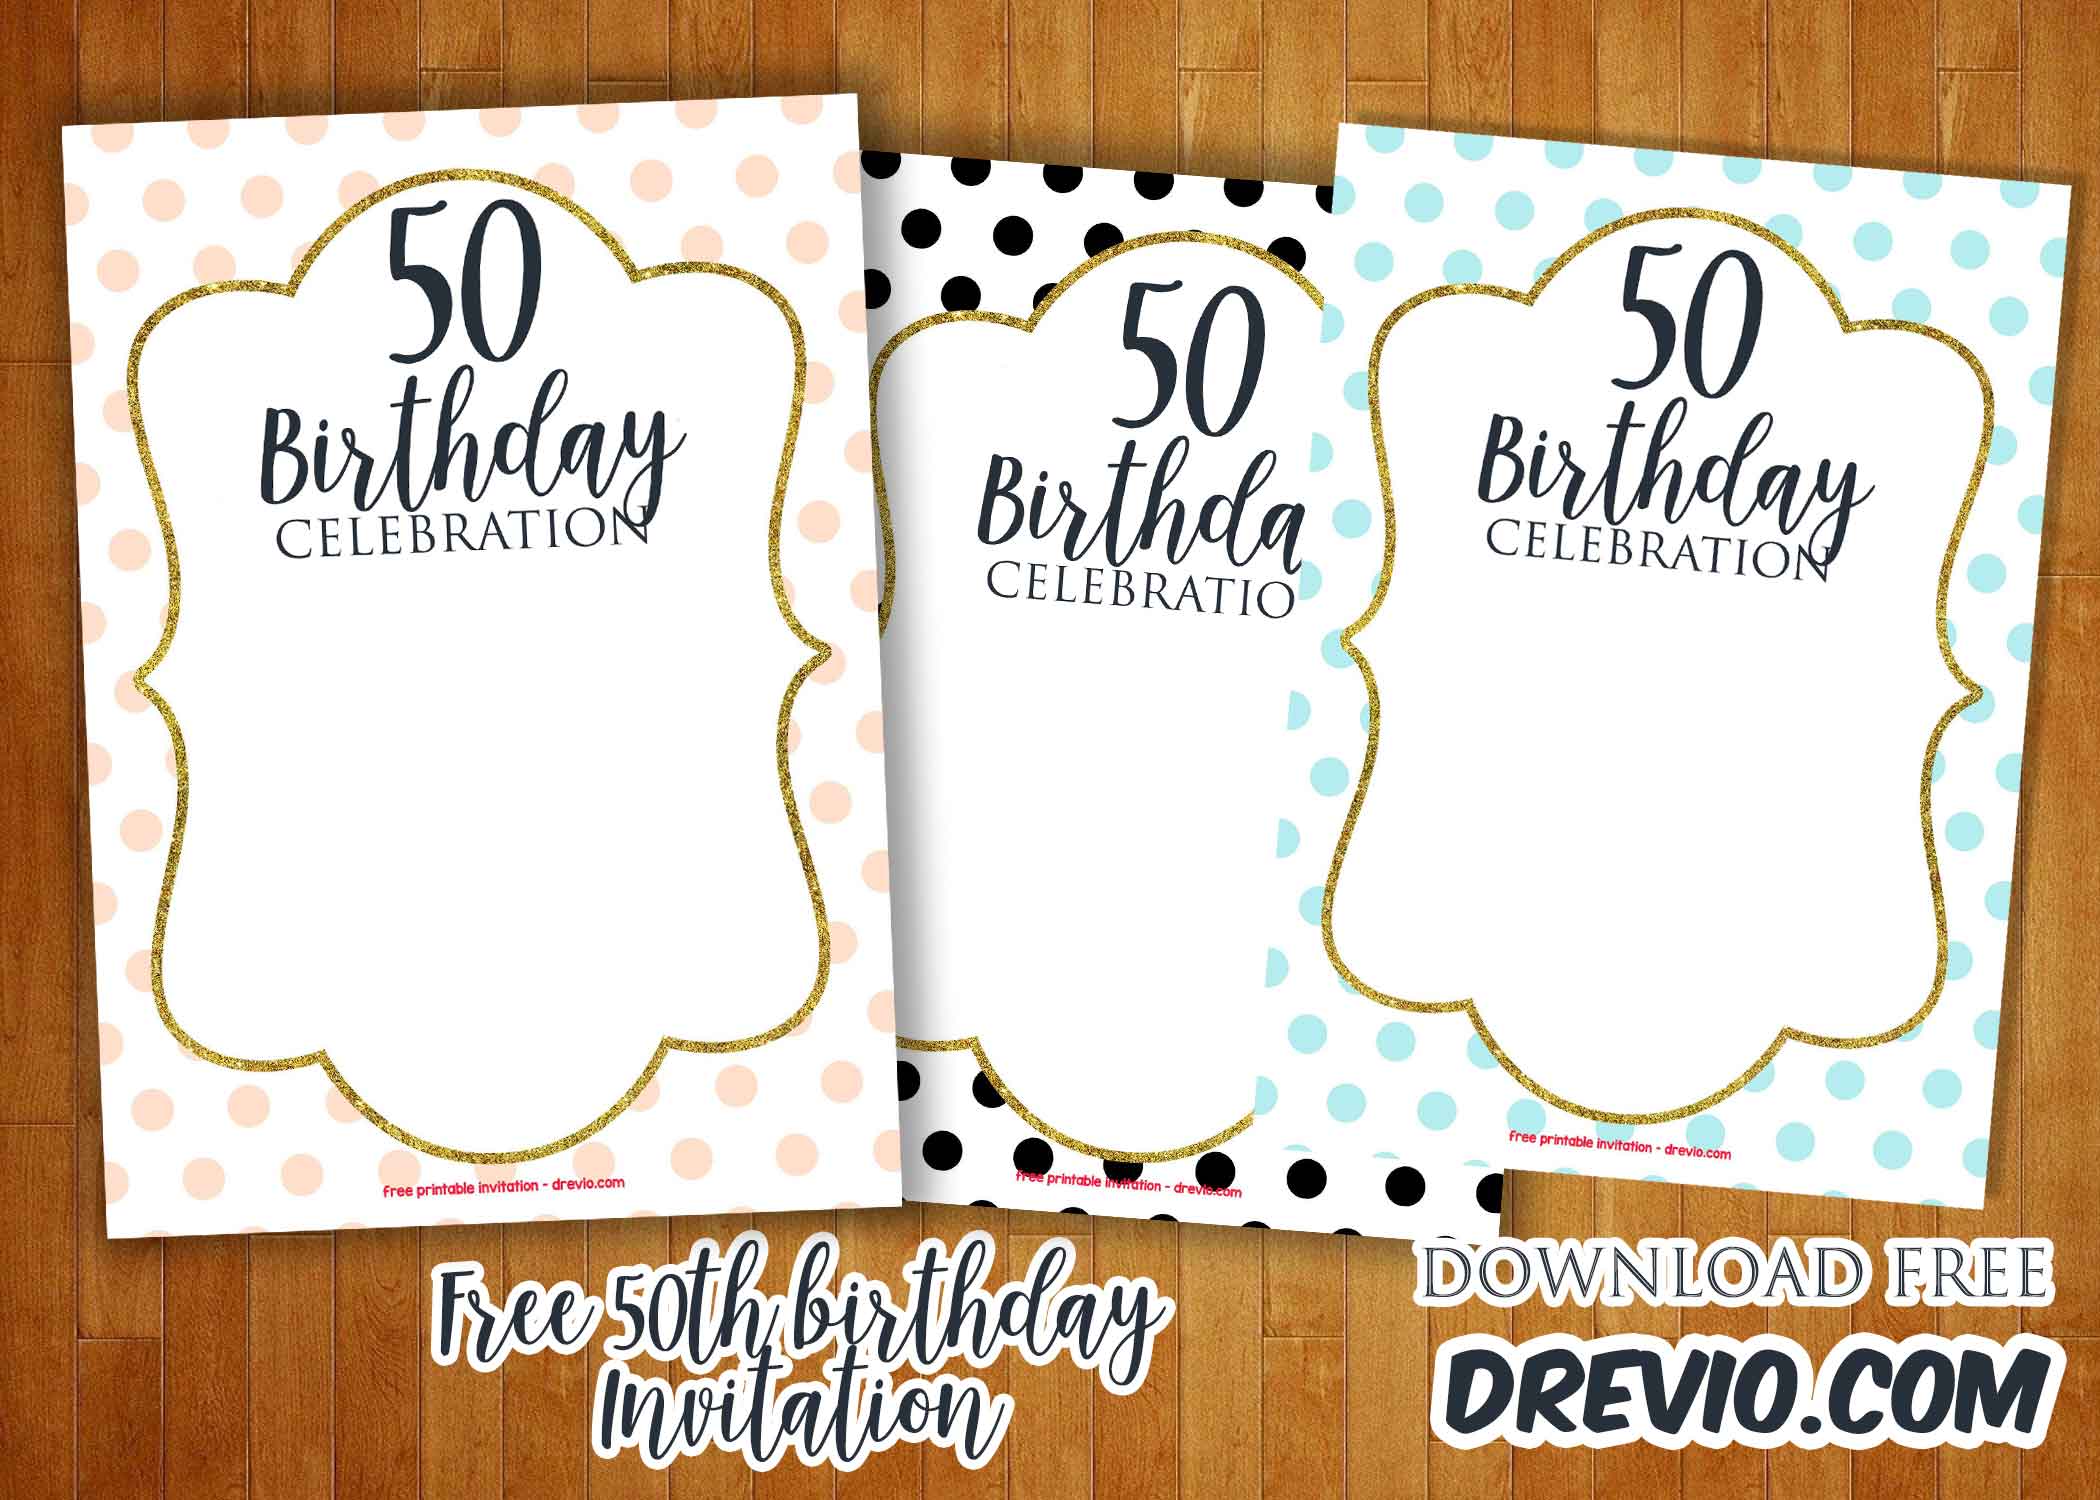 50th-birthday-invitations-online-free-printable-birthday-invitation-templates